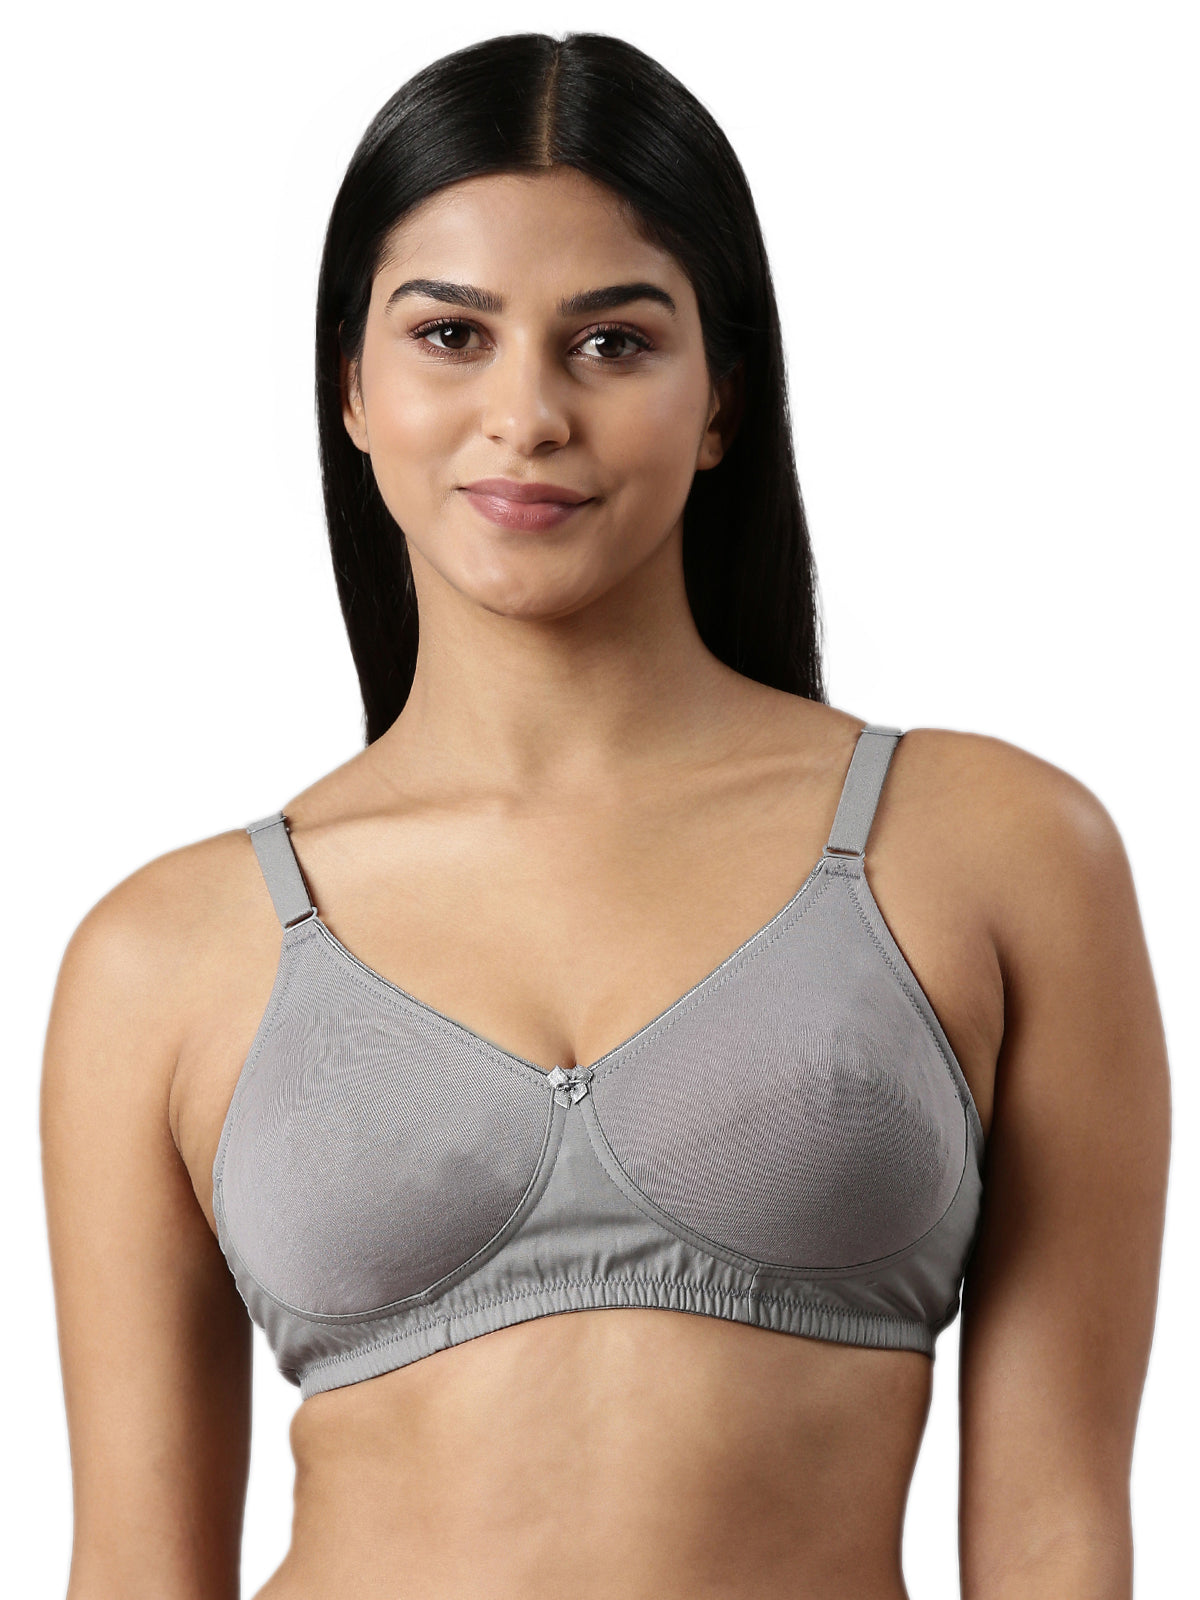 blossom-ethnic bra-dark grey1-woven cotton-everyday bra